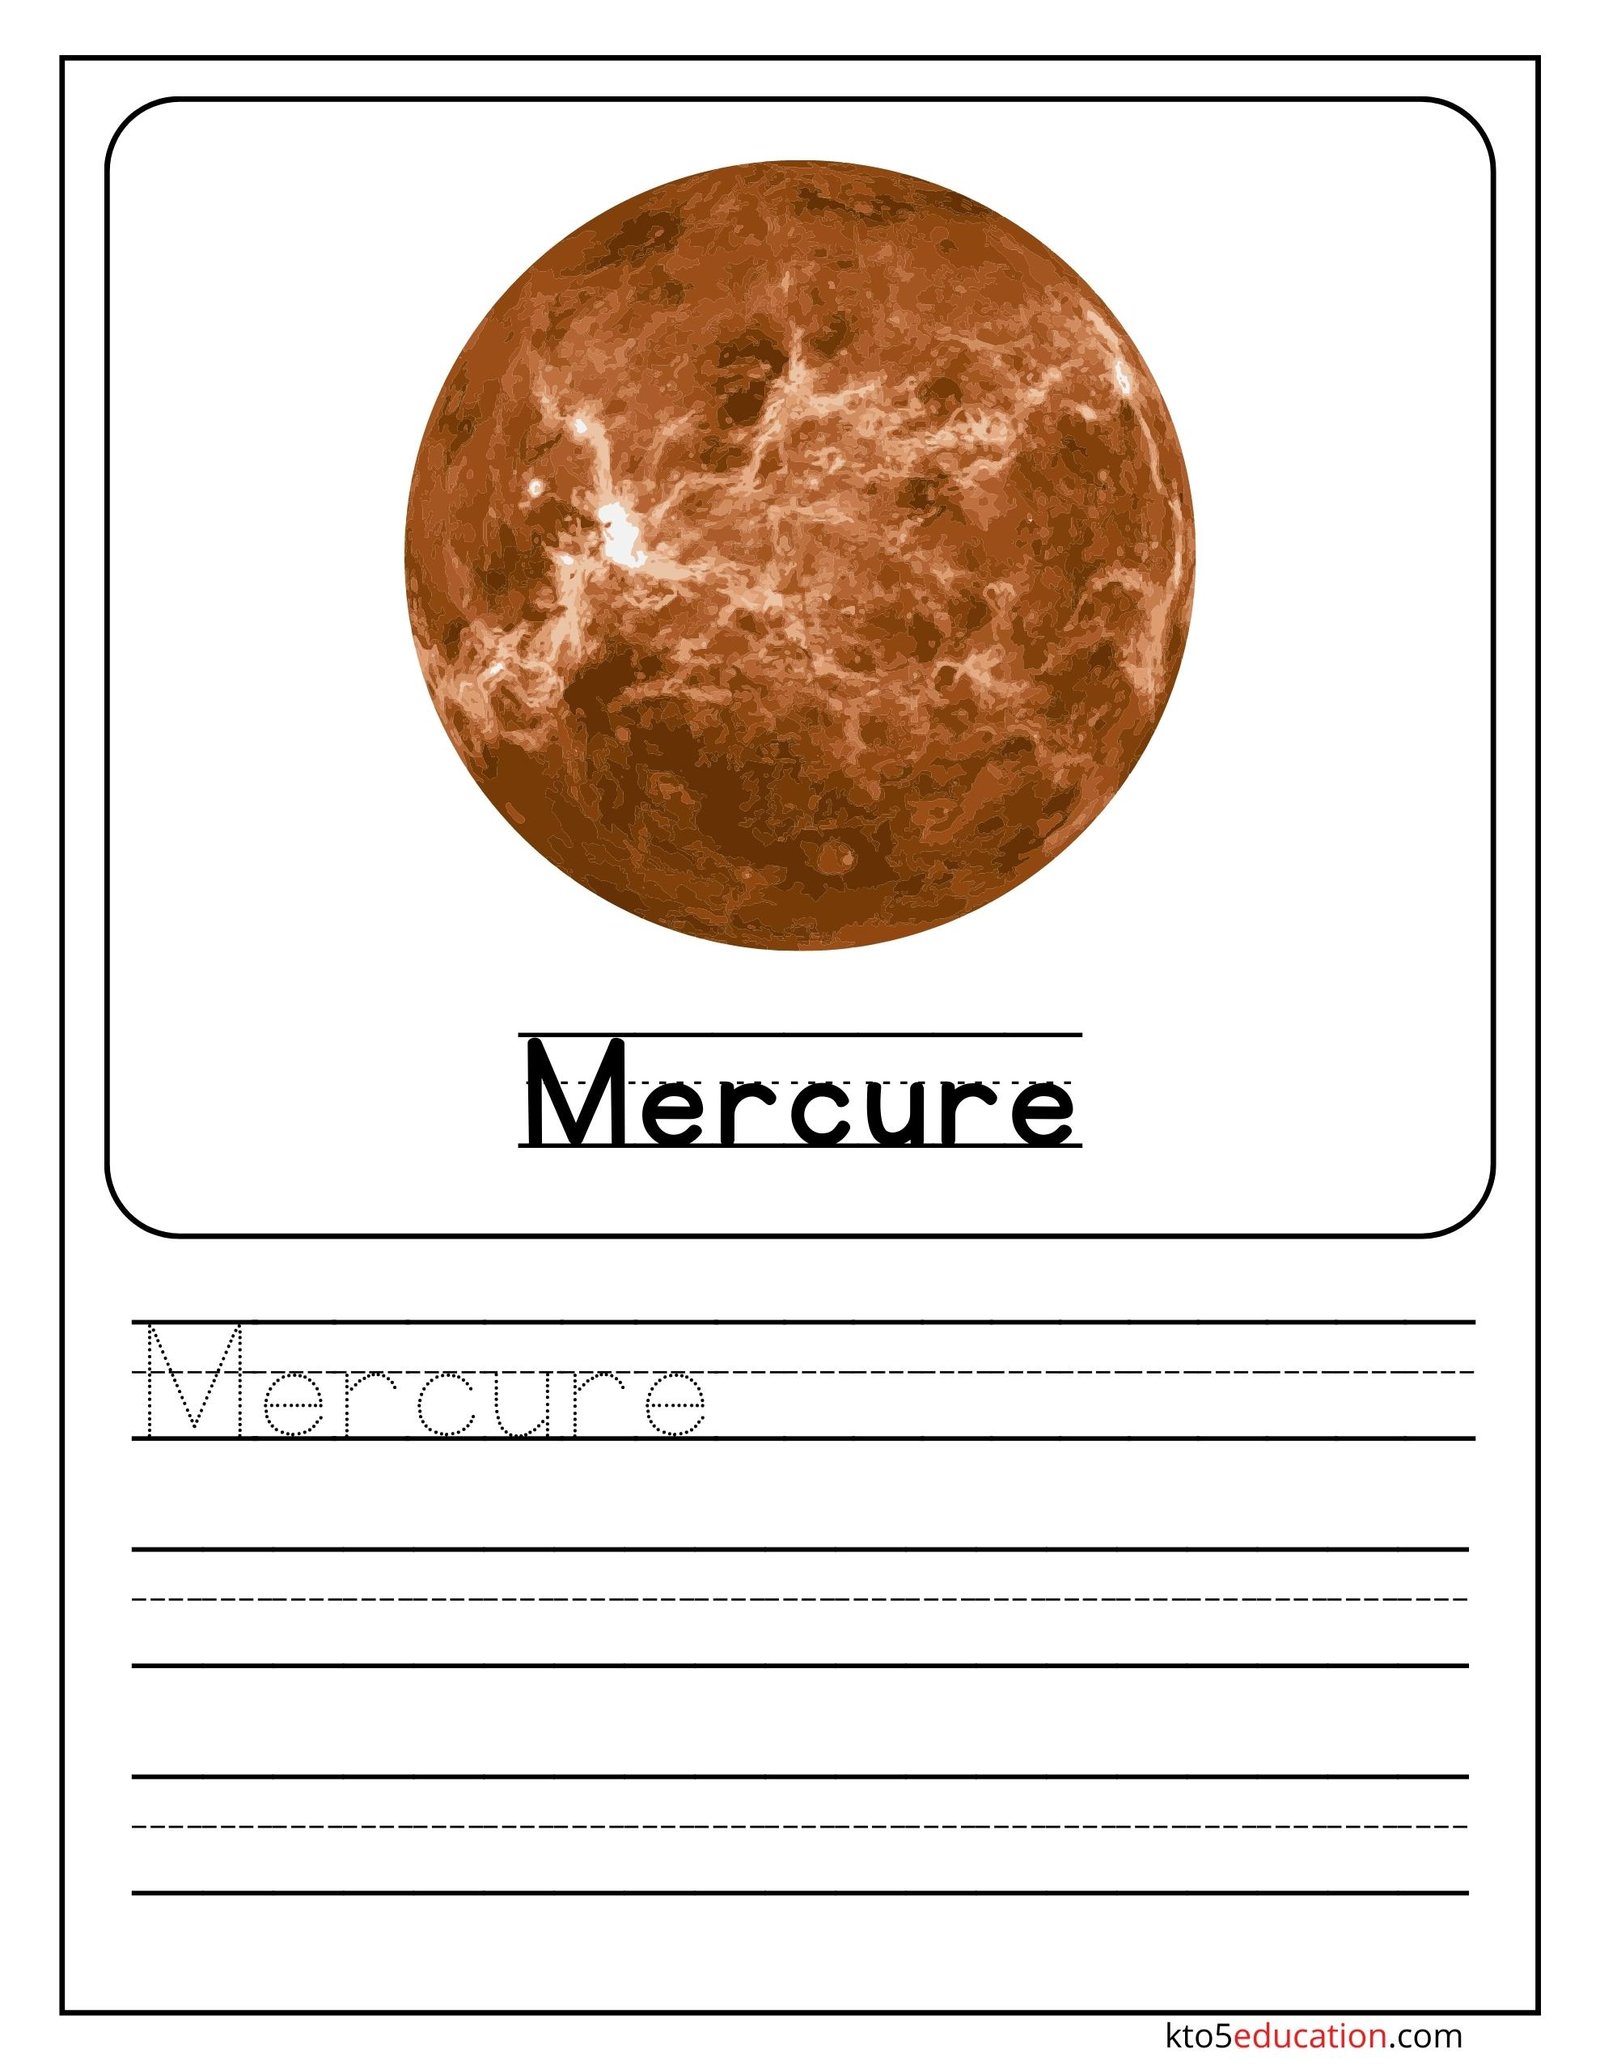 Mercury Planet Name Practice in French Language Worksheet